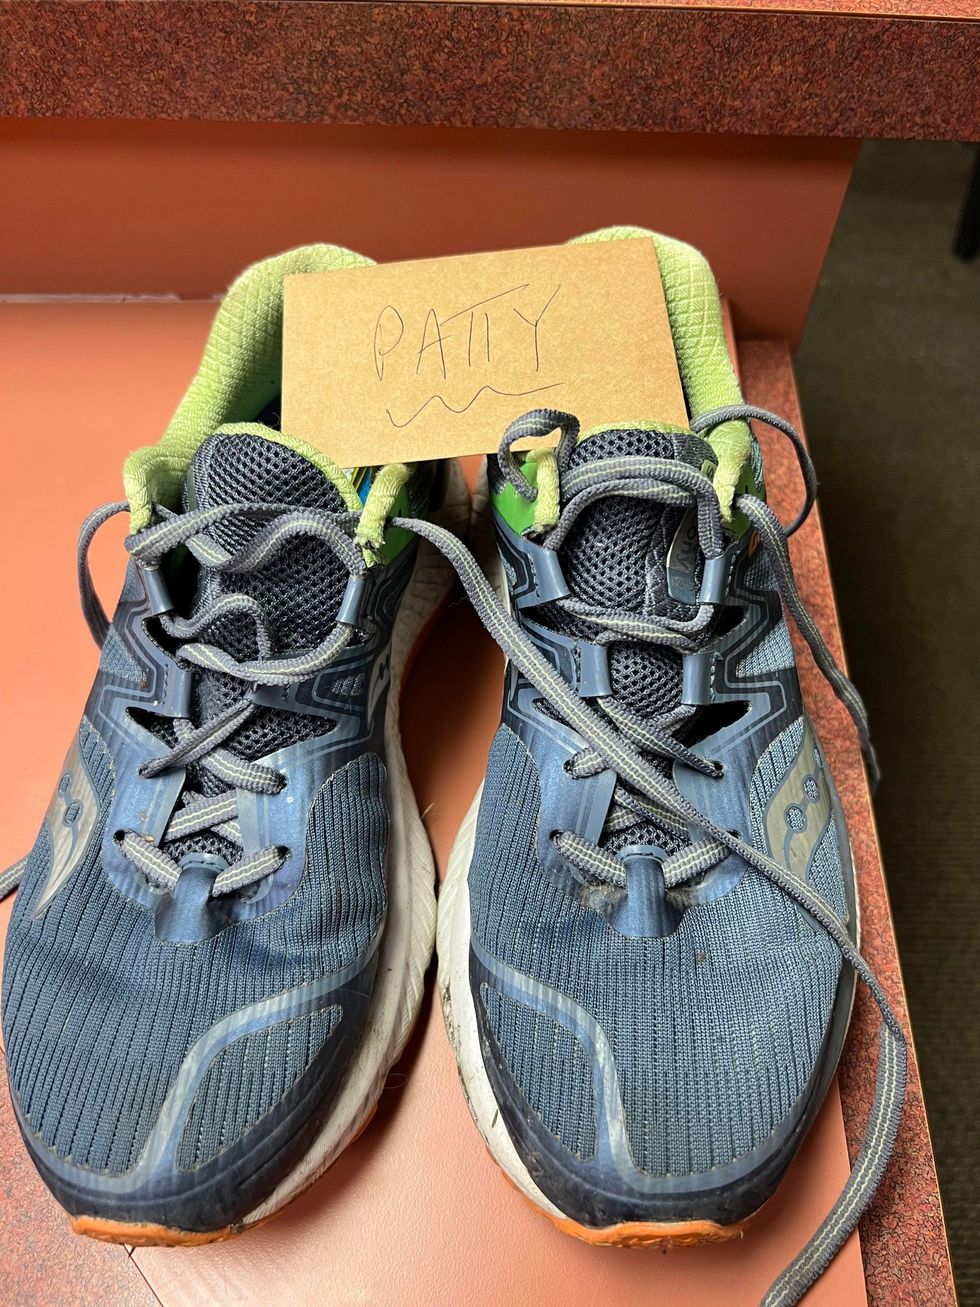 No Shoes, No Sweat—Marathoner Wins in a Borrowed Pair